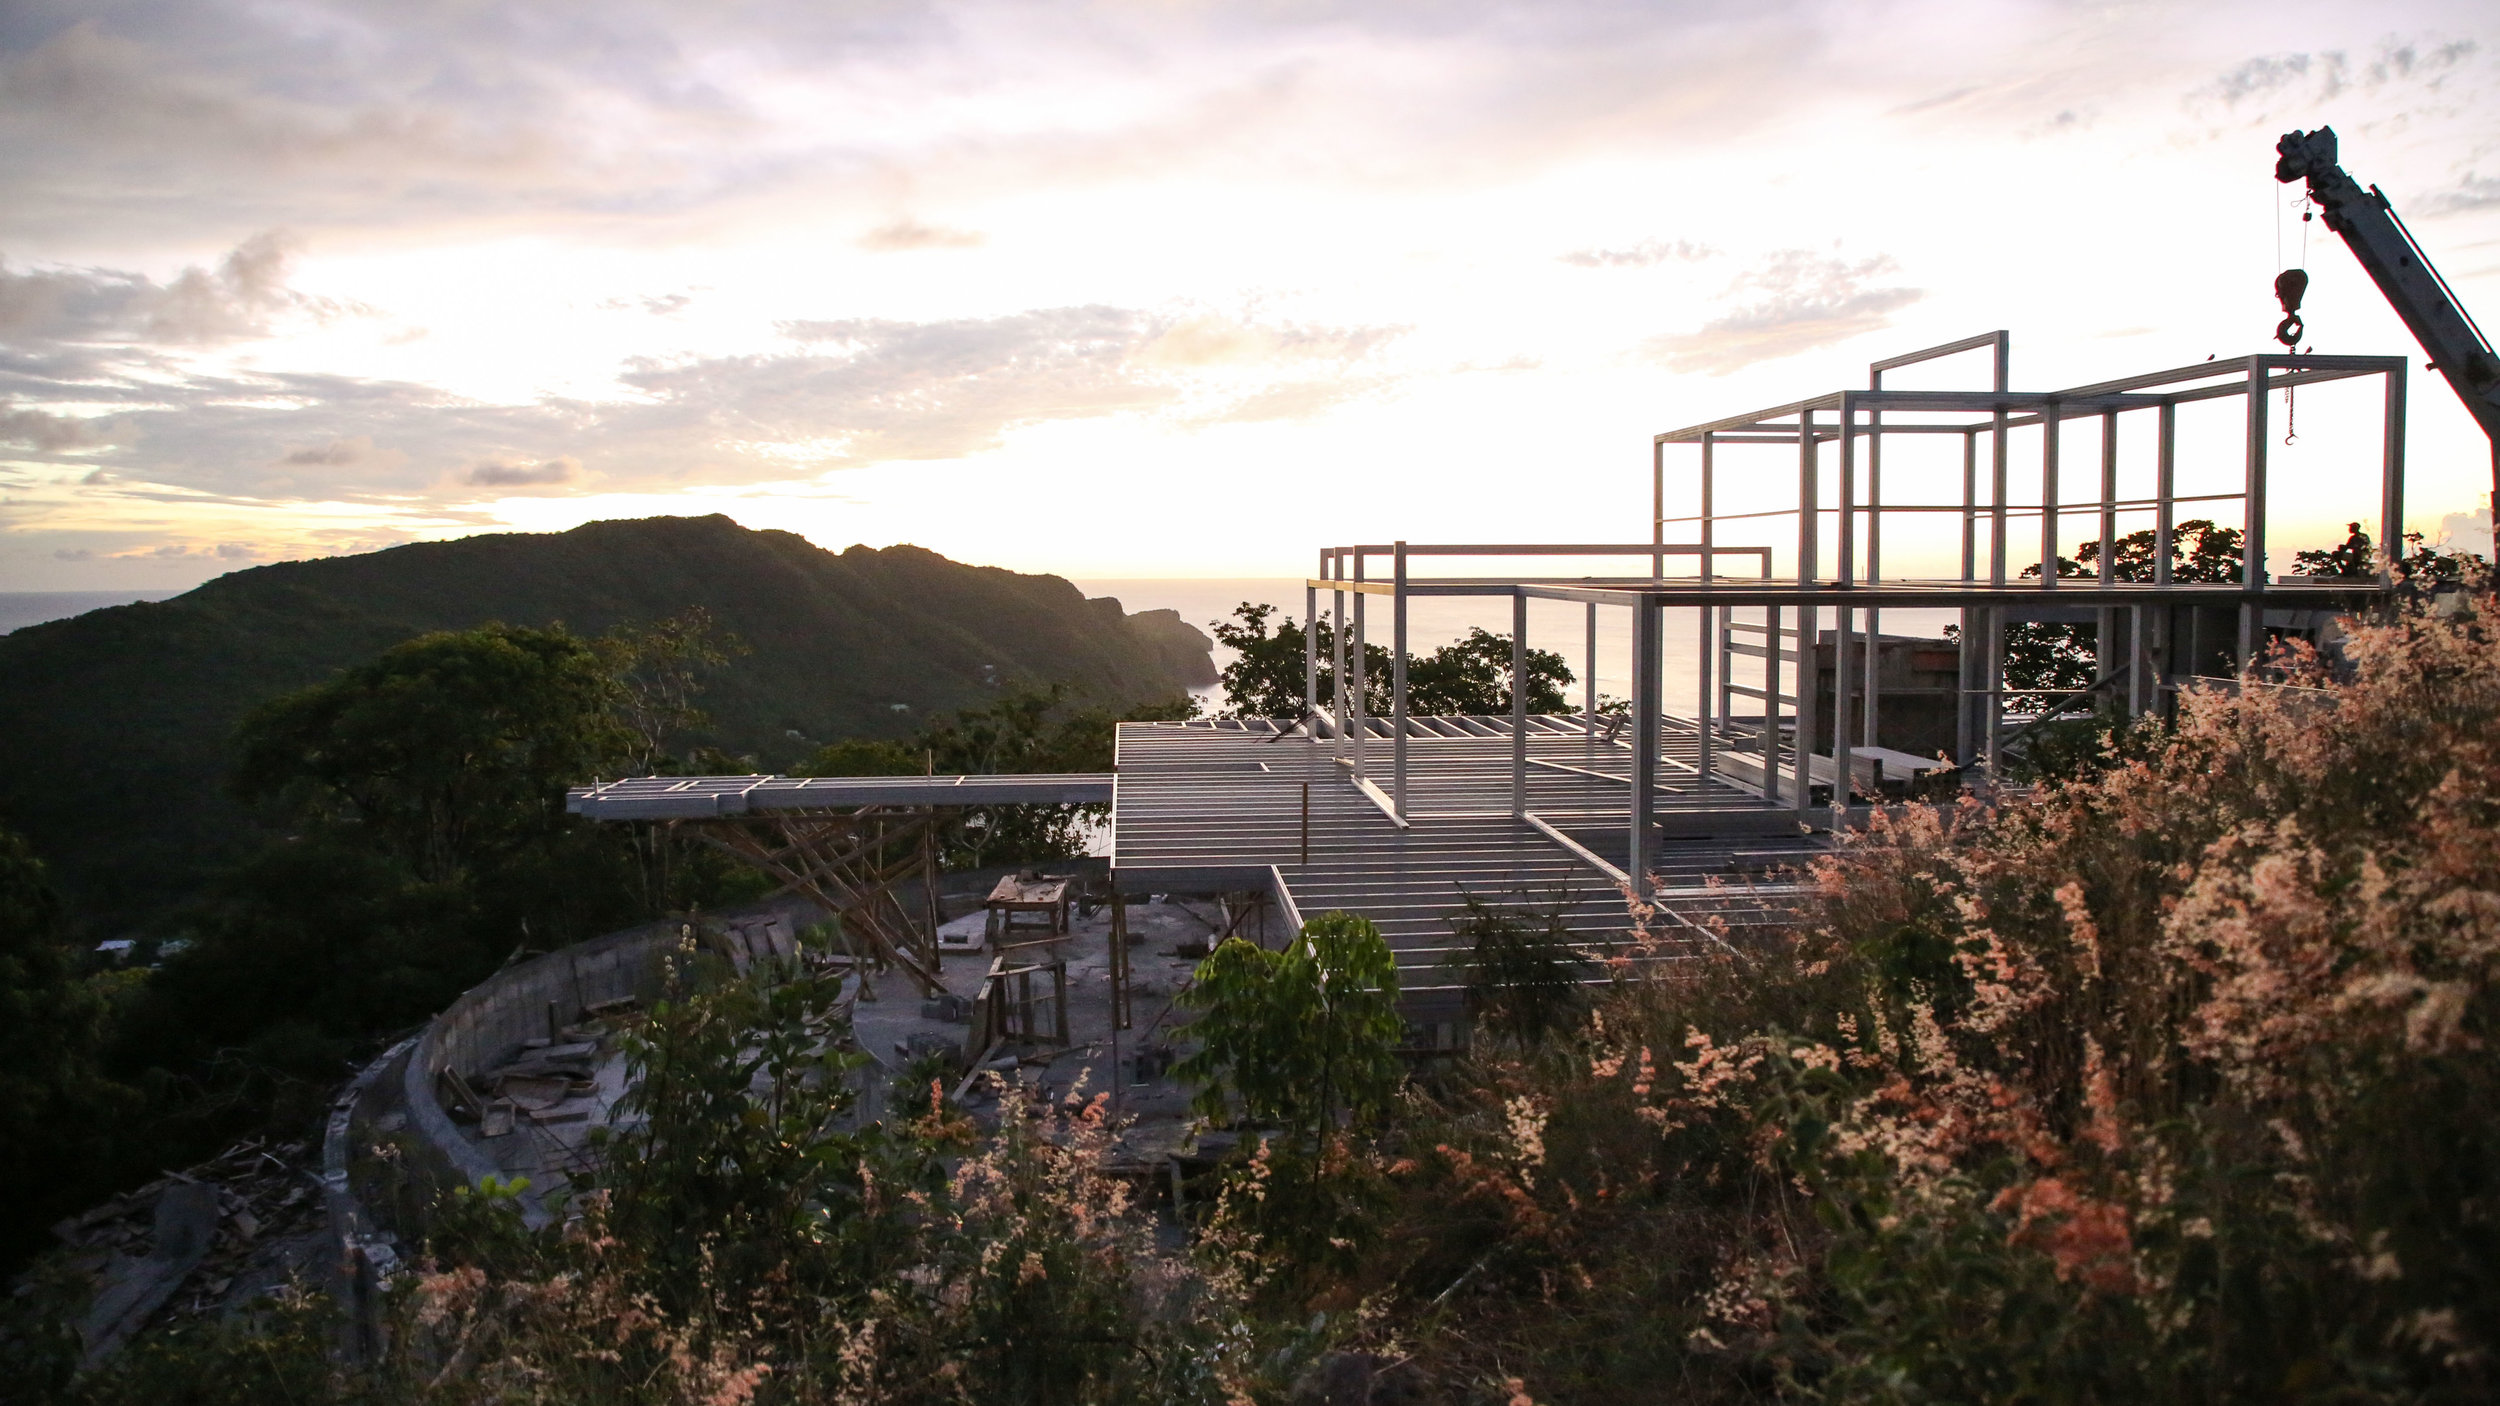 S.E.A.-Studio-Environmental-Architecture-David-Hertz-FAIA-Sail-House-Cloud9-Bequia-Saint-Vincent-Grenadines-Caribbean-Island-sustainable-regenerative-restorative-green-design-hospitality-tropical-resort-hotel-biomimetic-tensile-structure-progress-10.jpg